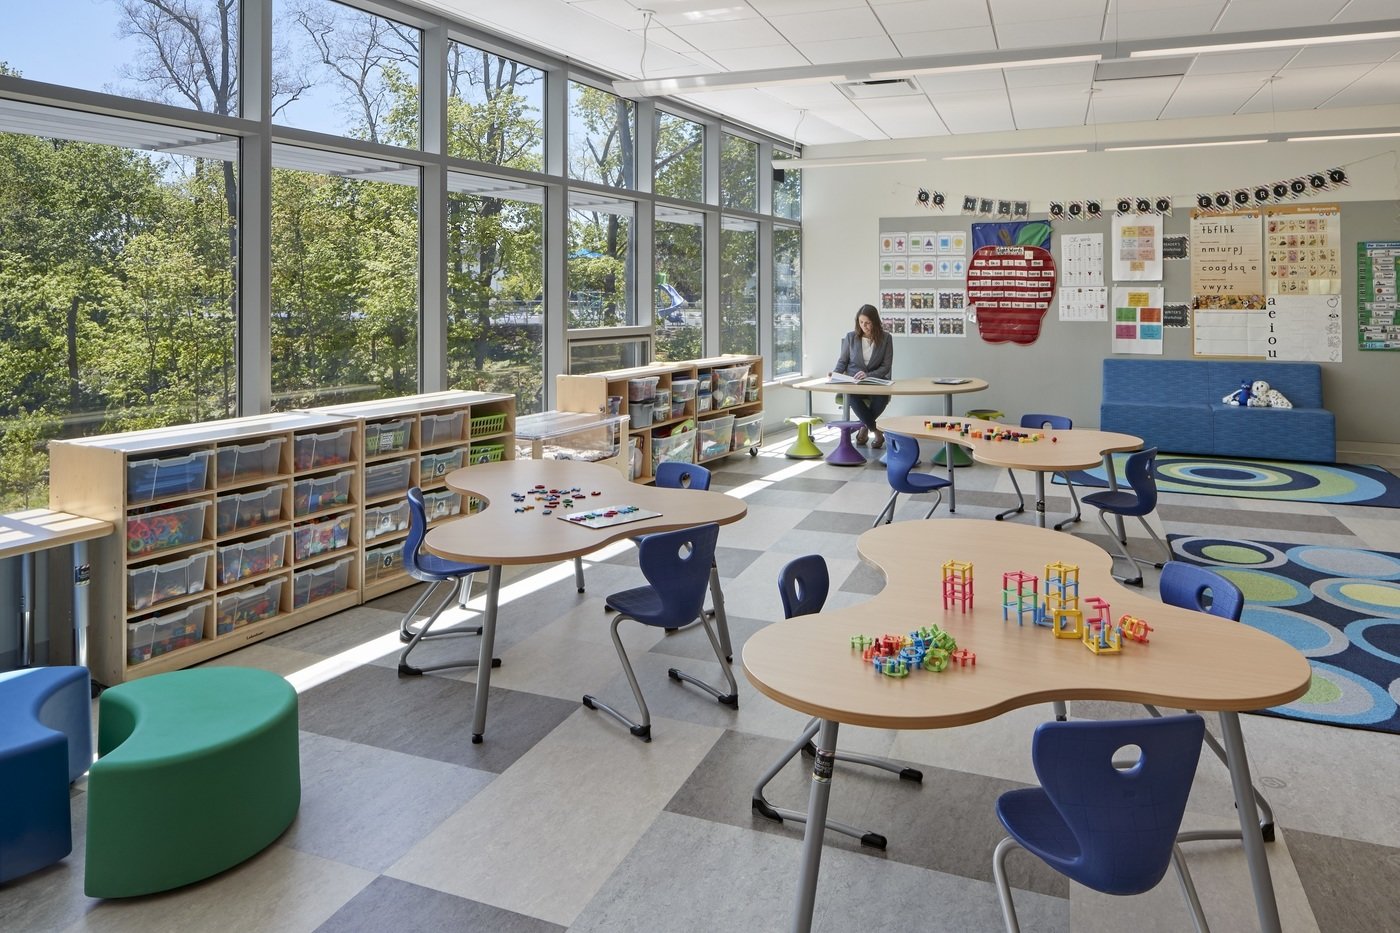 16 tskp greenwhich new lebanon elementary school flexible interior classroom seating 1400 xxx q85